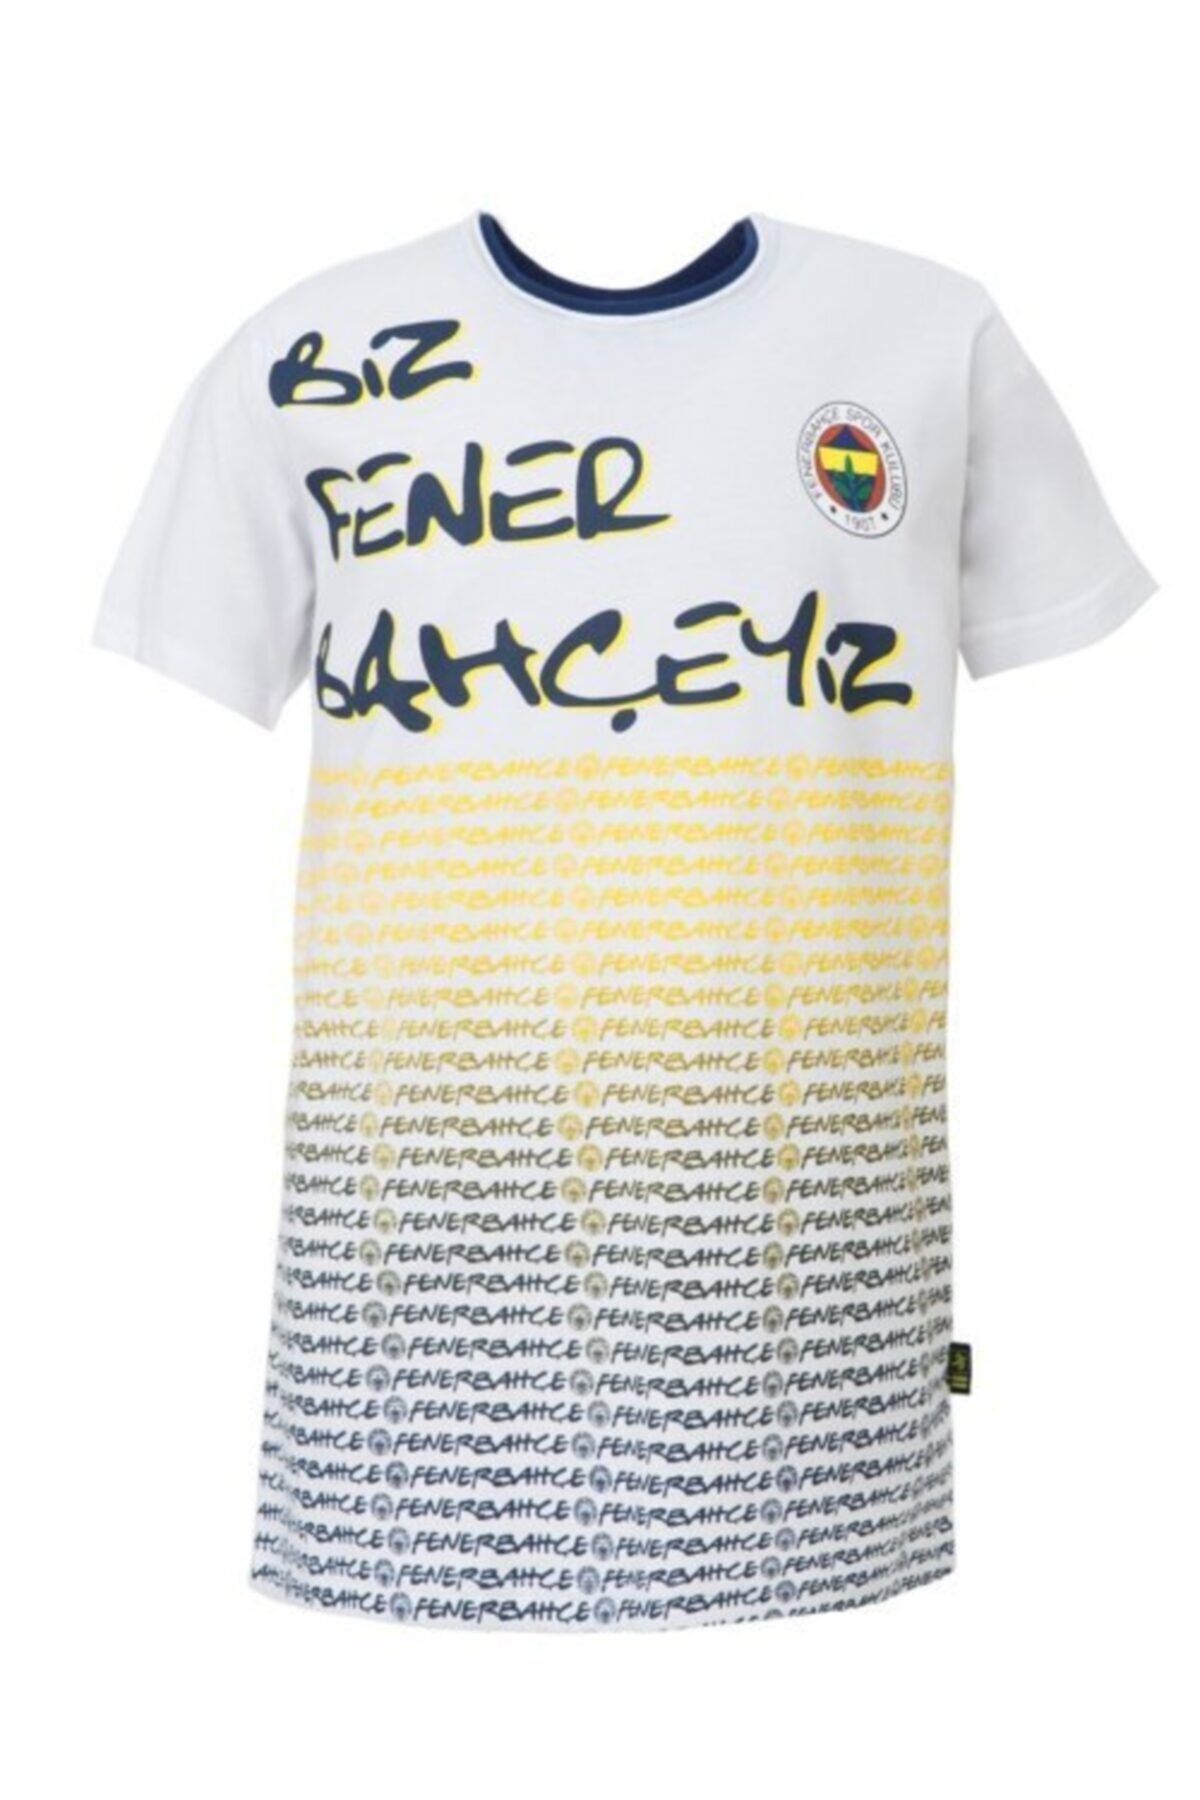 Fenerbahçe Fb102-v1 Fenerbahçe T-shirt Çocuk